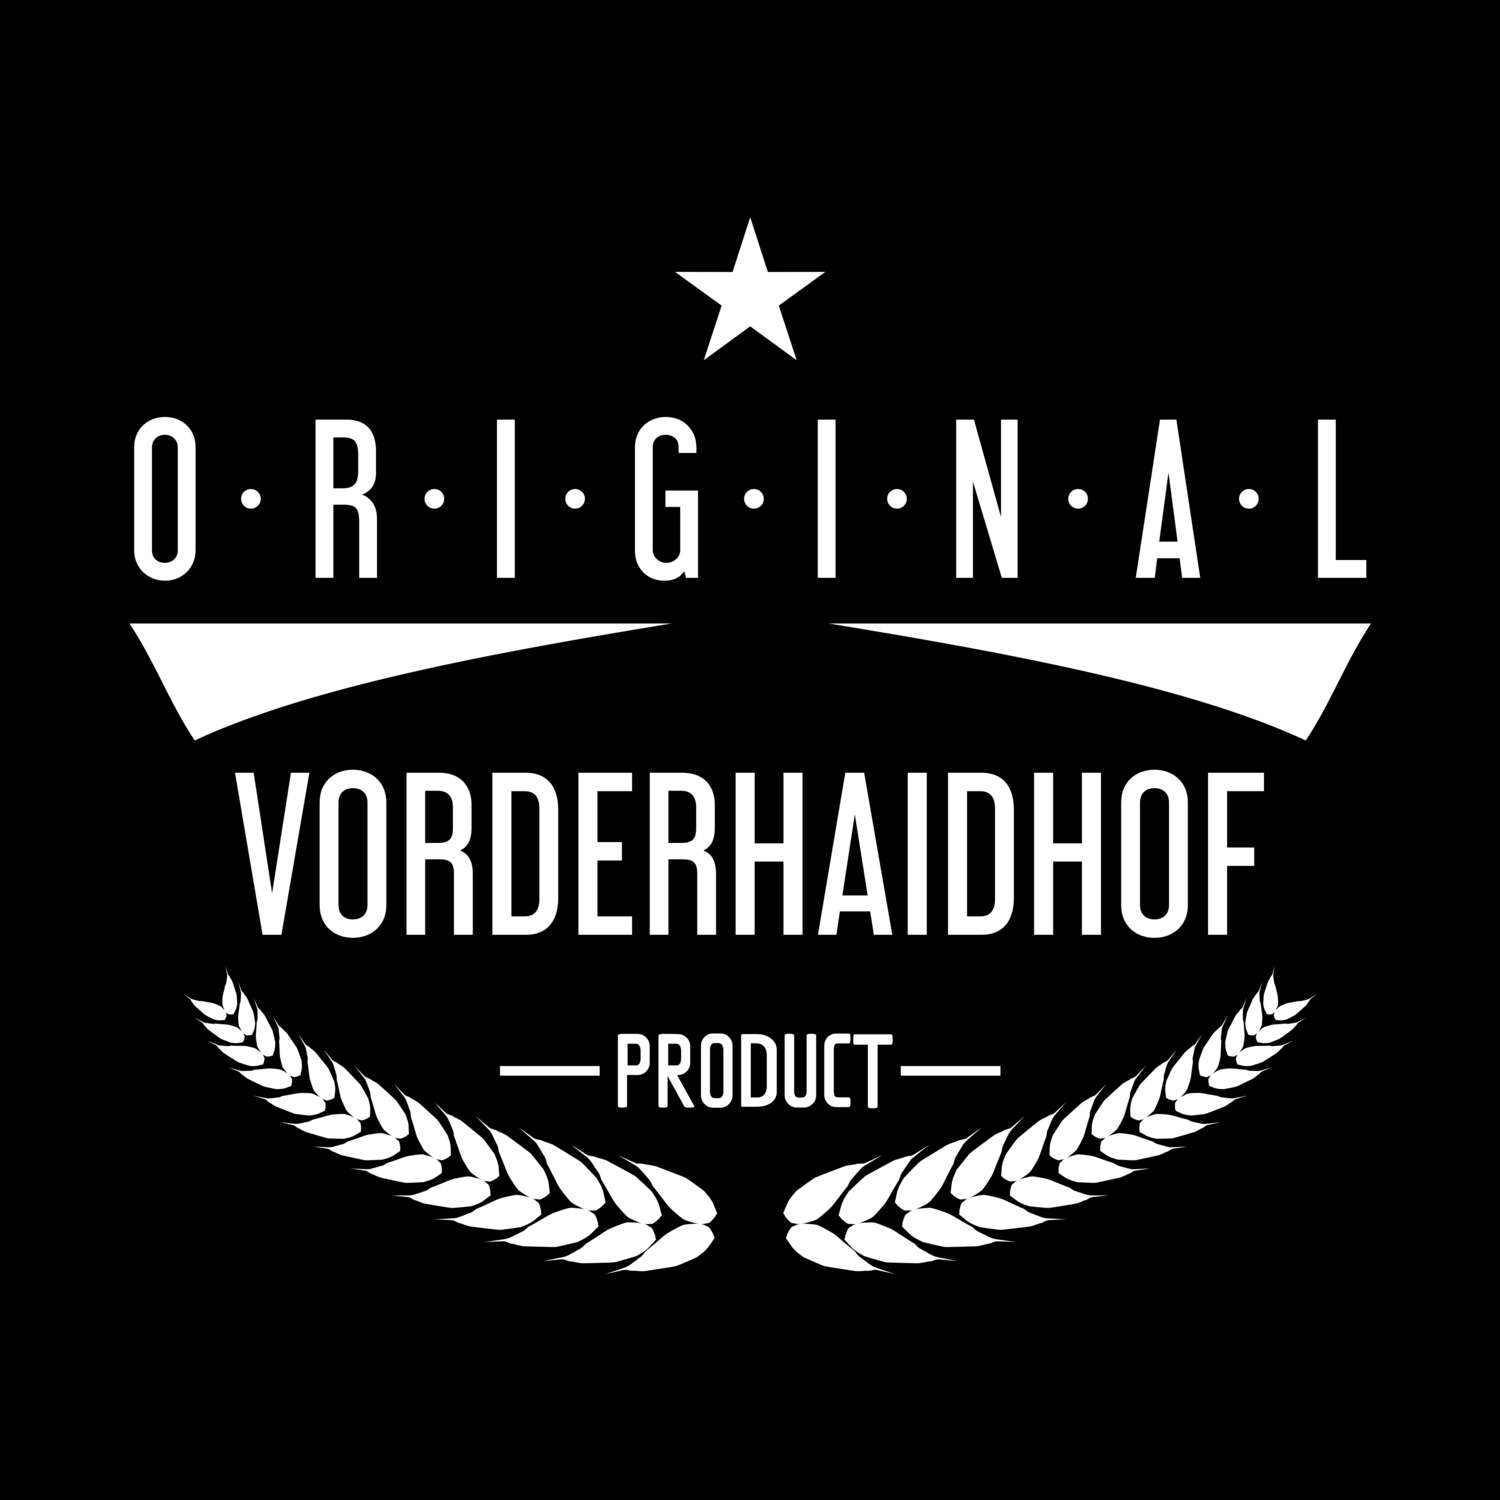 Vorderhaidhof T-Shirt »Original Product«